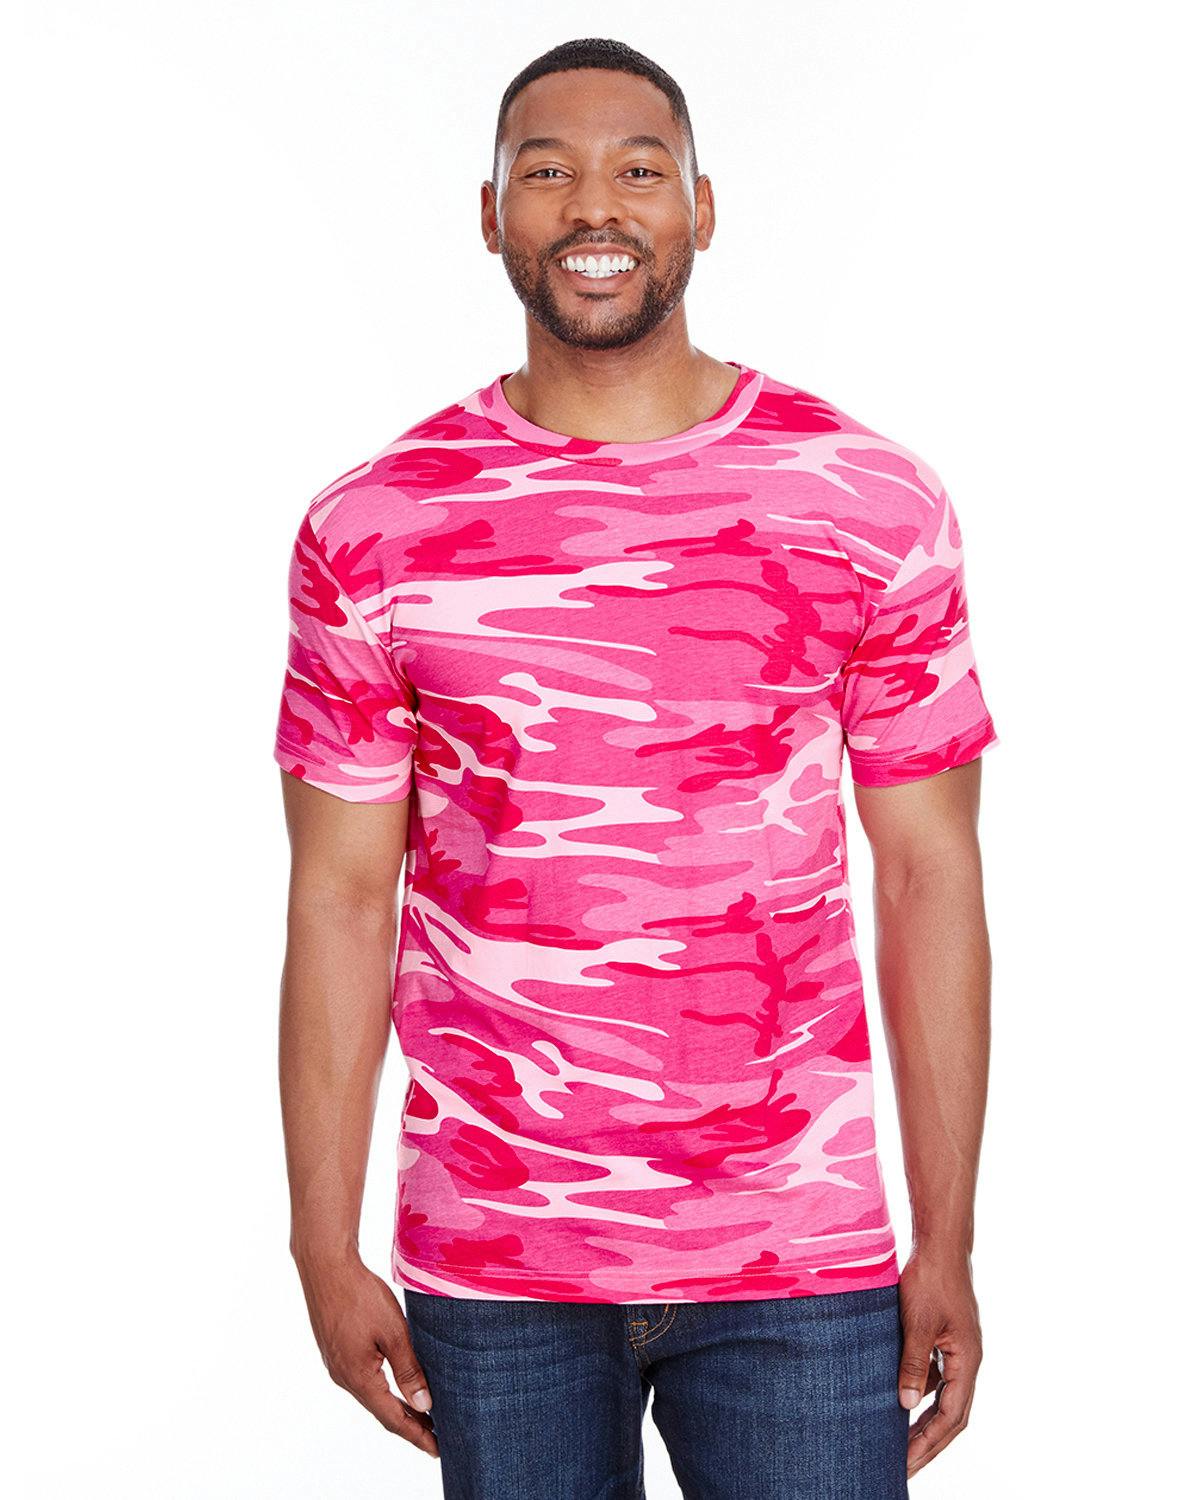 Image for Men's Camo T-Shirt